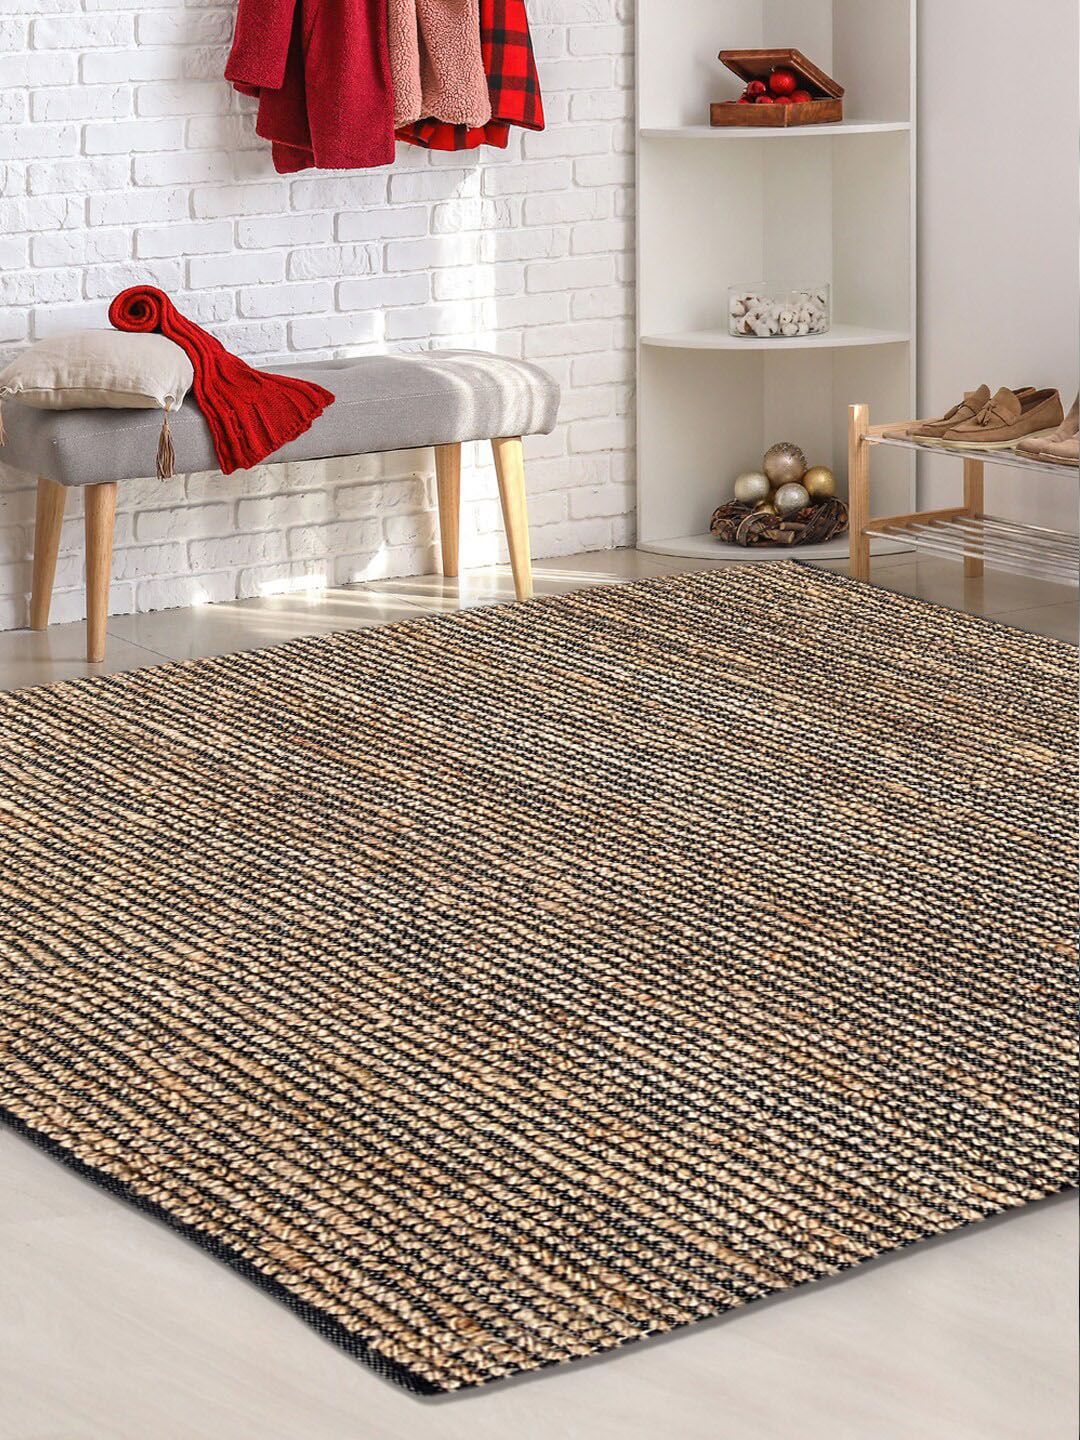 AVI Living Brown & Black GSM 450 Self-Design Carpet Price in India